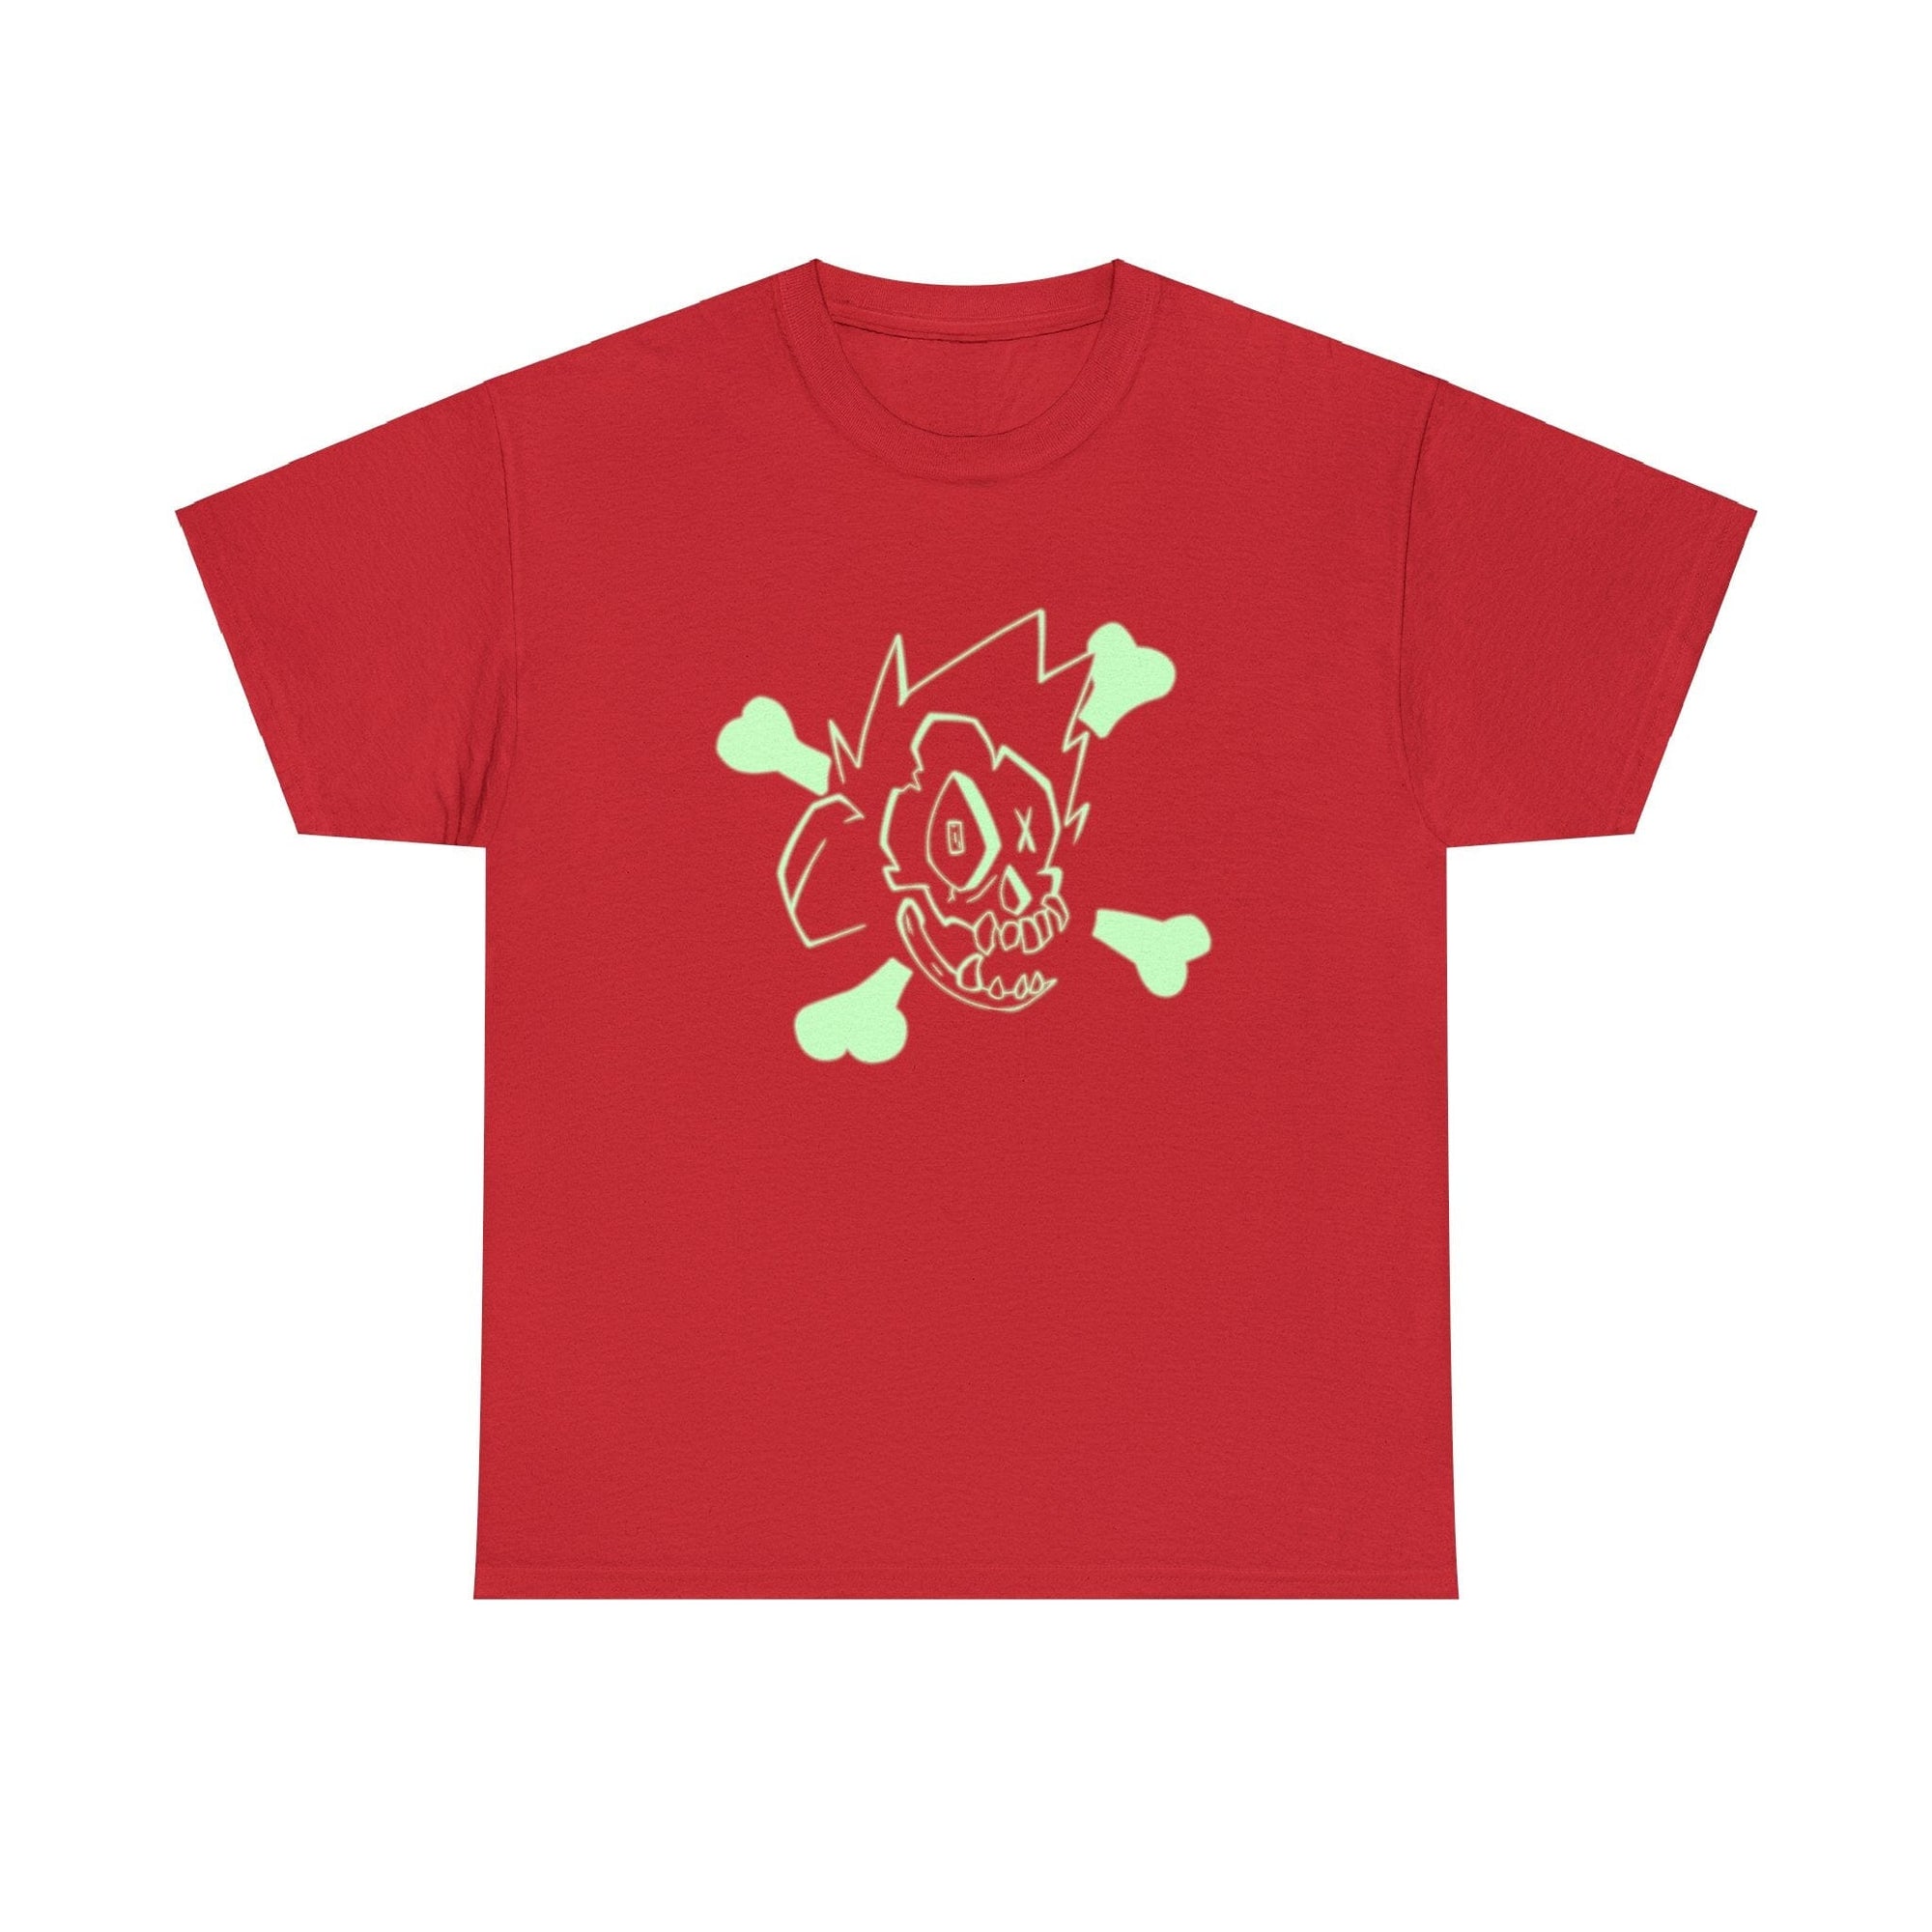 Skull jax! - T-Shirt T-Shirt AFLT-DaveyDboi Red S 